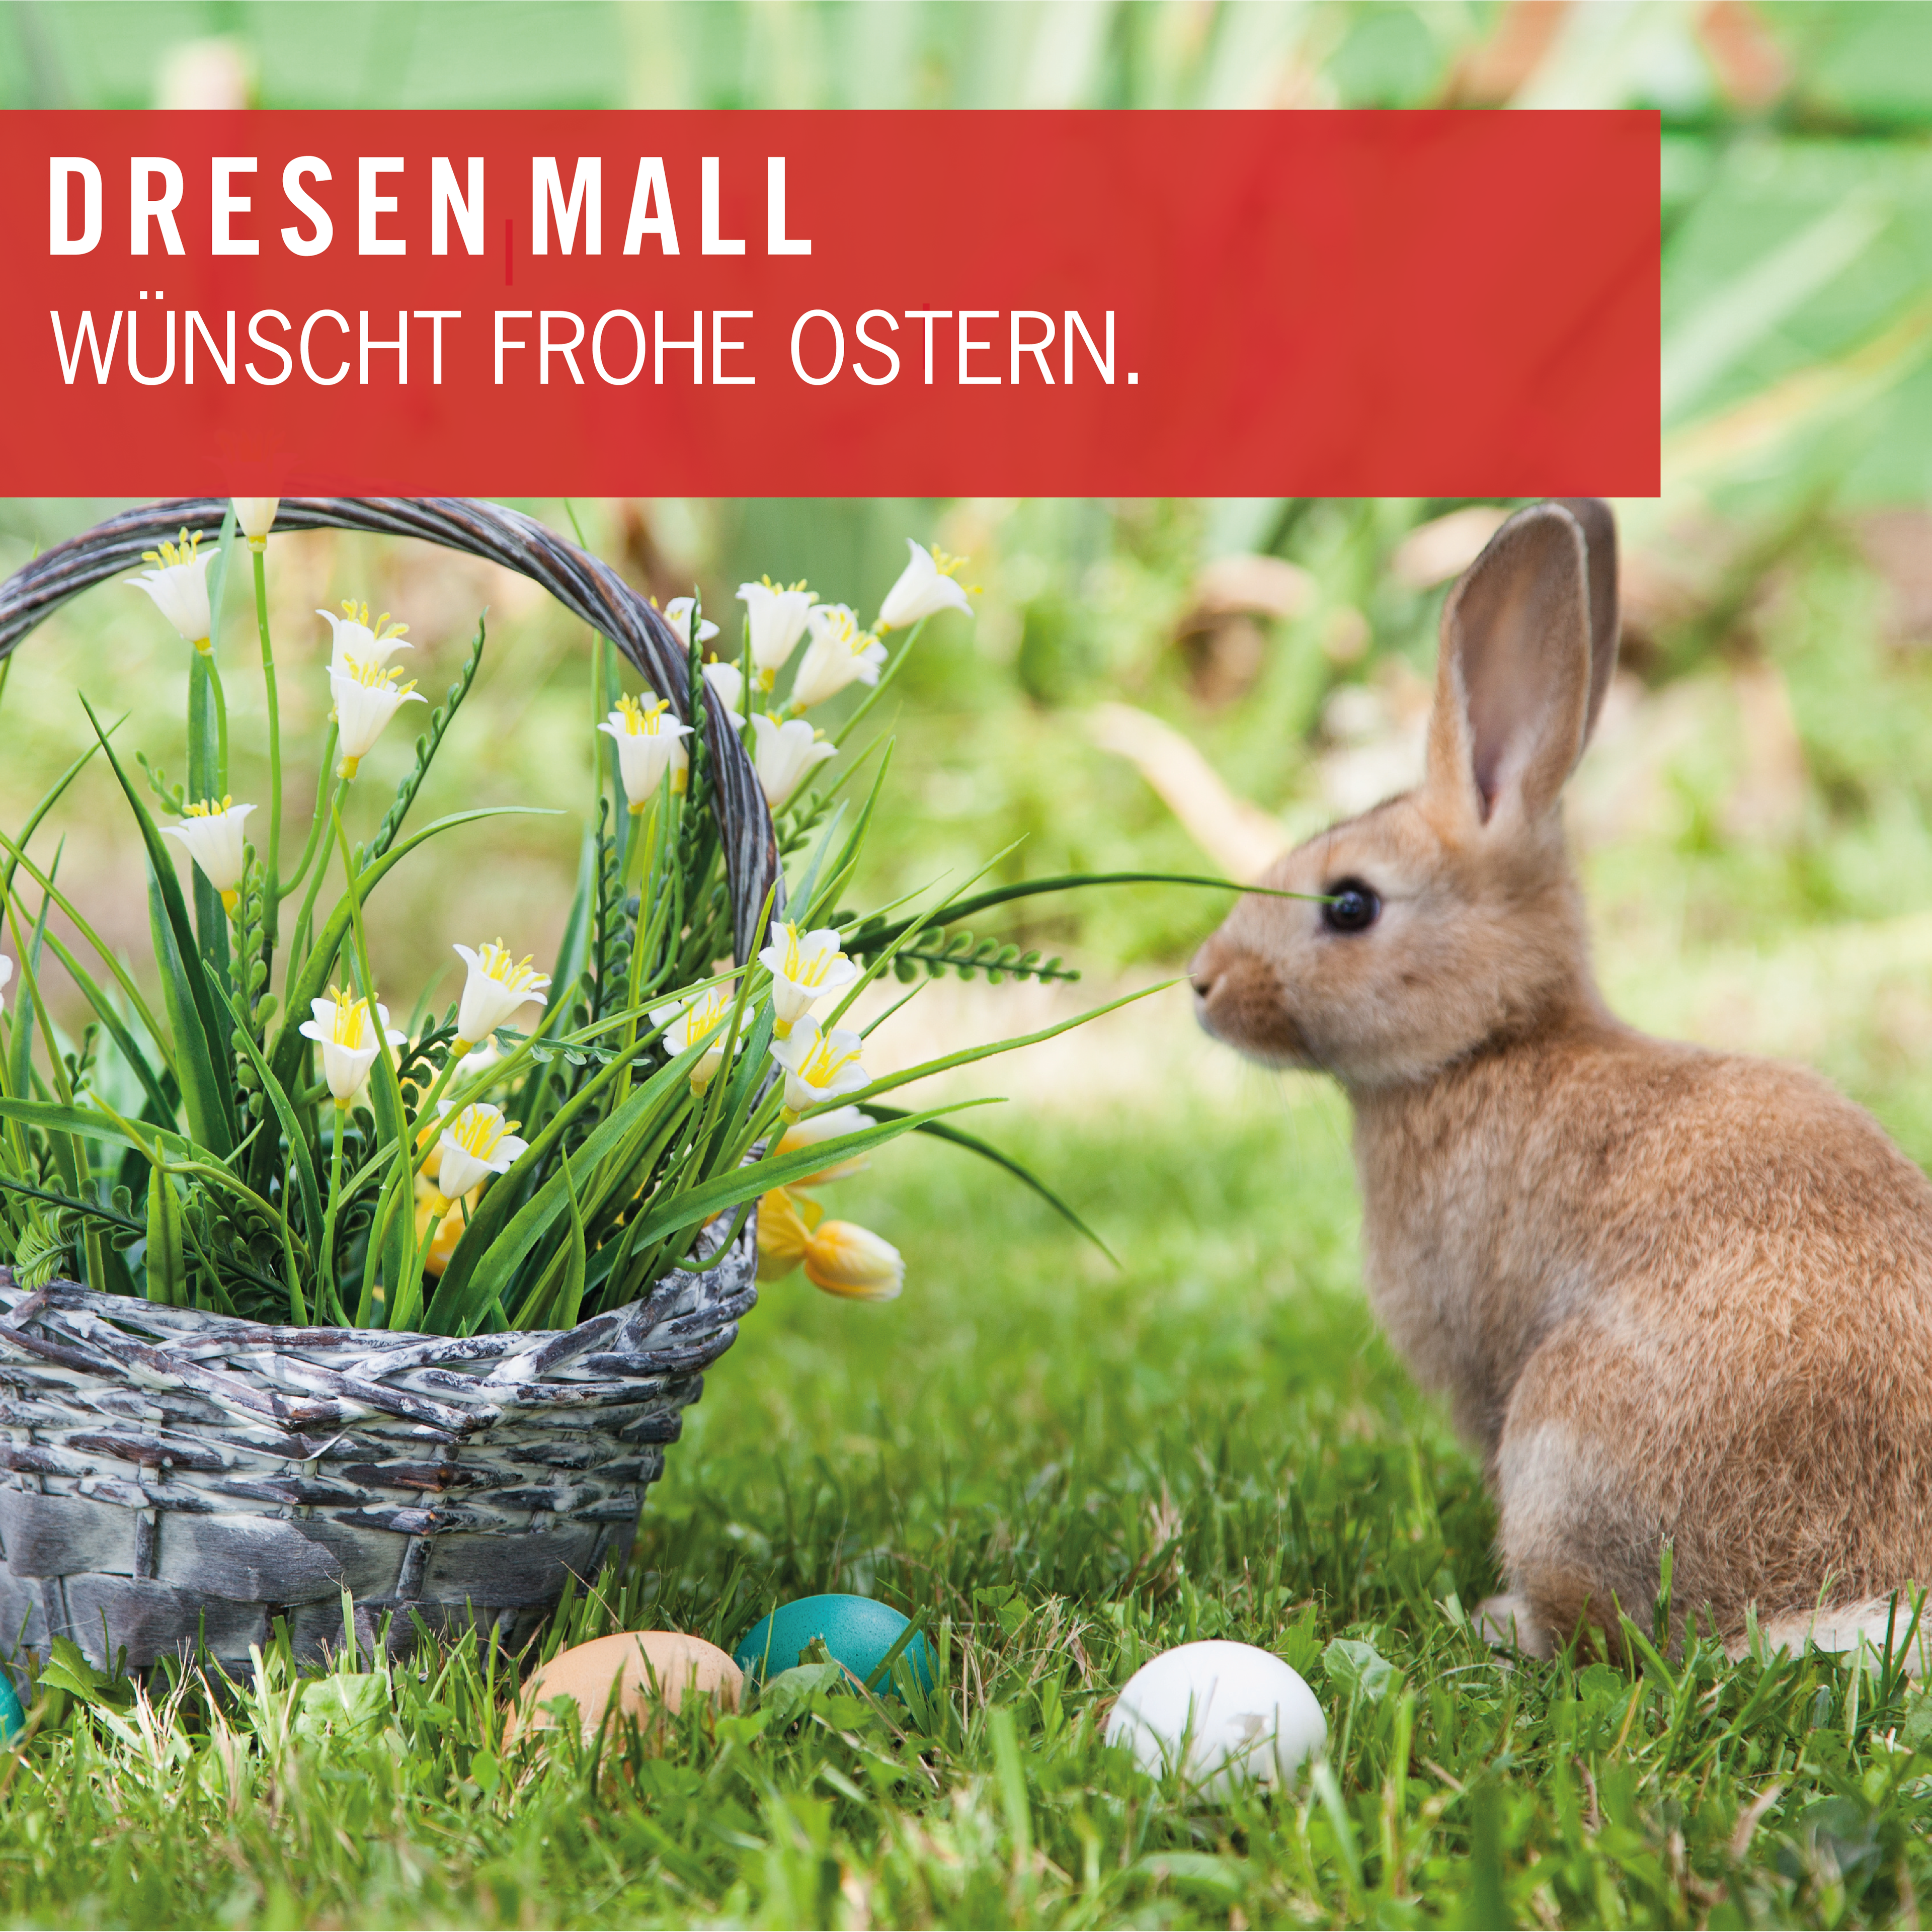 Symbolbild für Frohe Ostern wünscht DRESEN MALL!